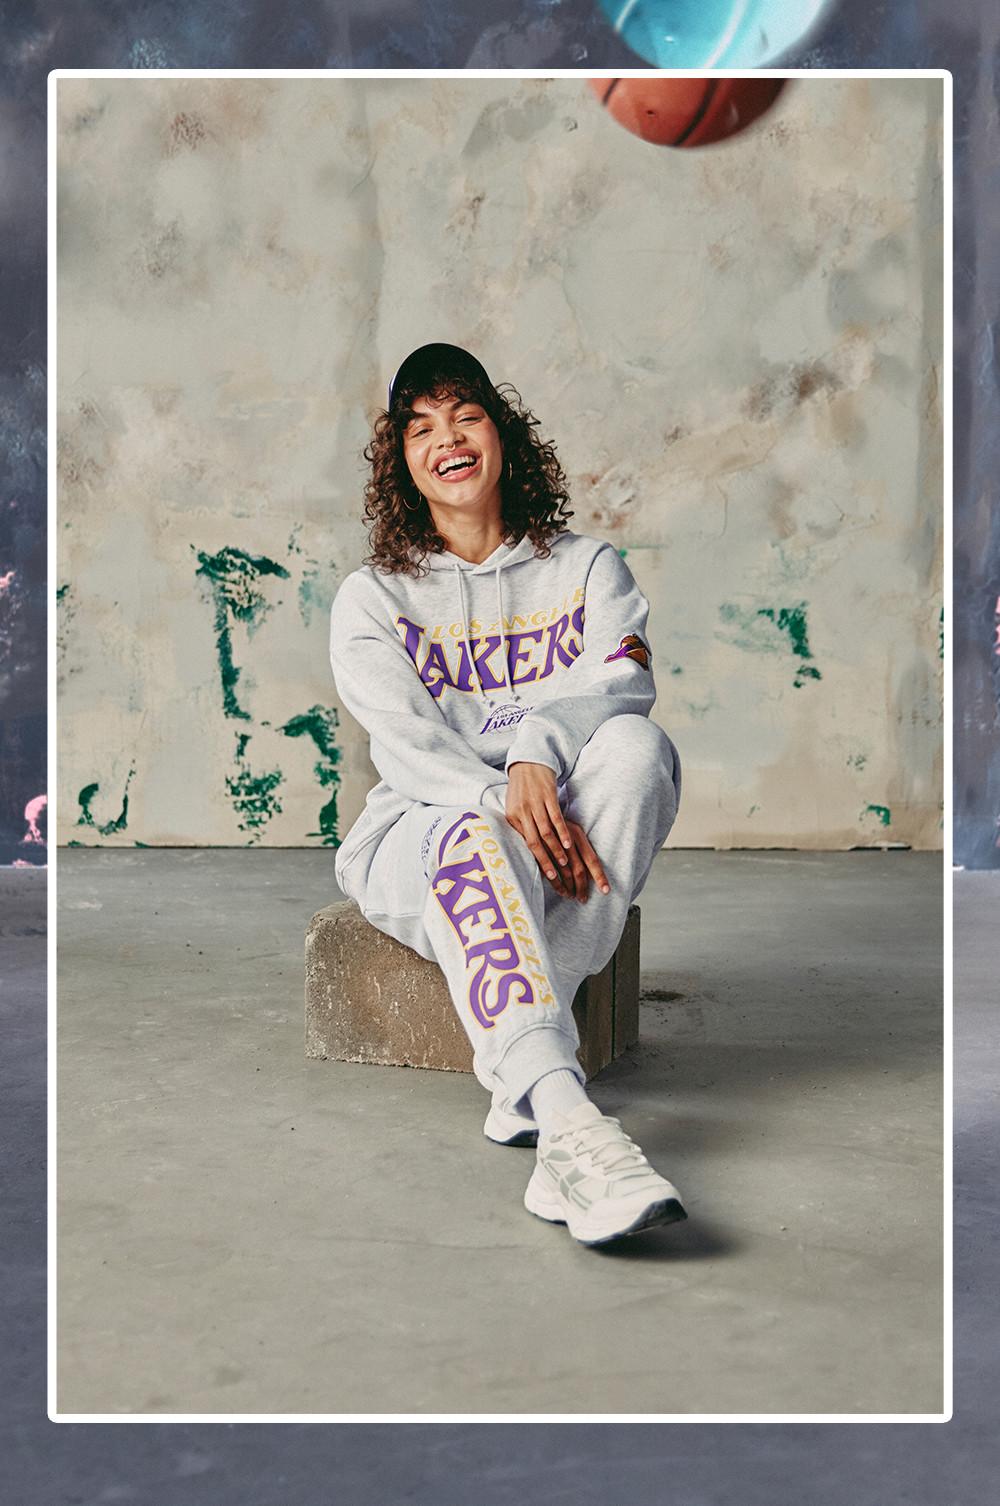 Modelo veste fato de treino e boné Lakers